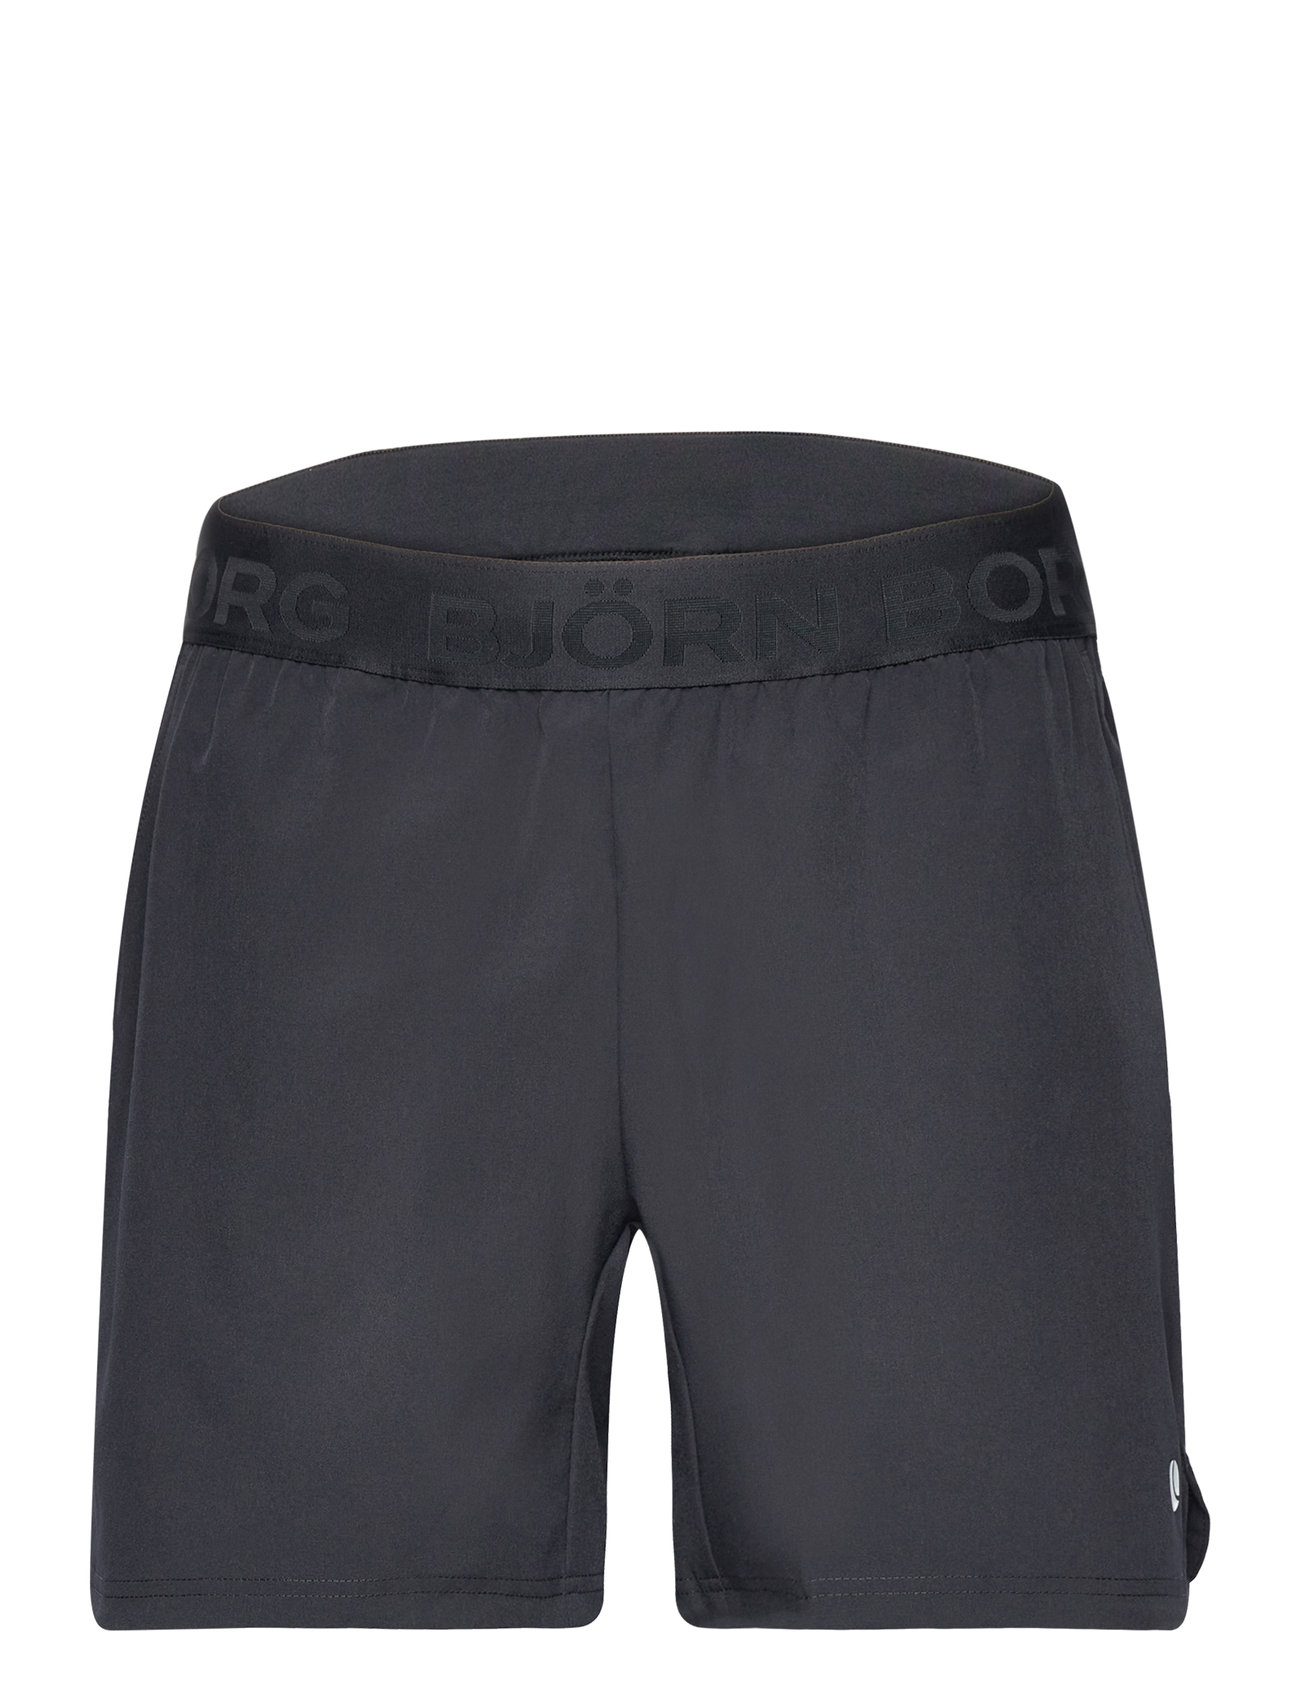 Björn Borg Ace Short Shorts - Sports shorts | Boozt.com